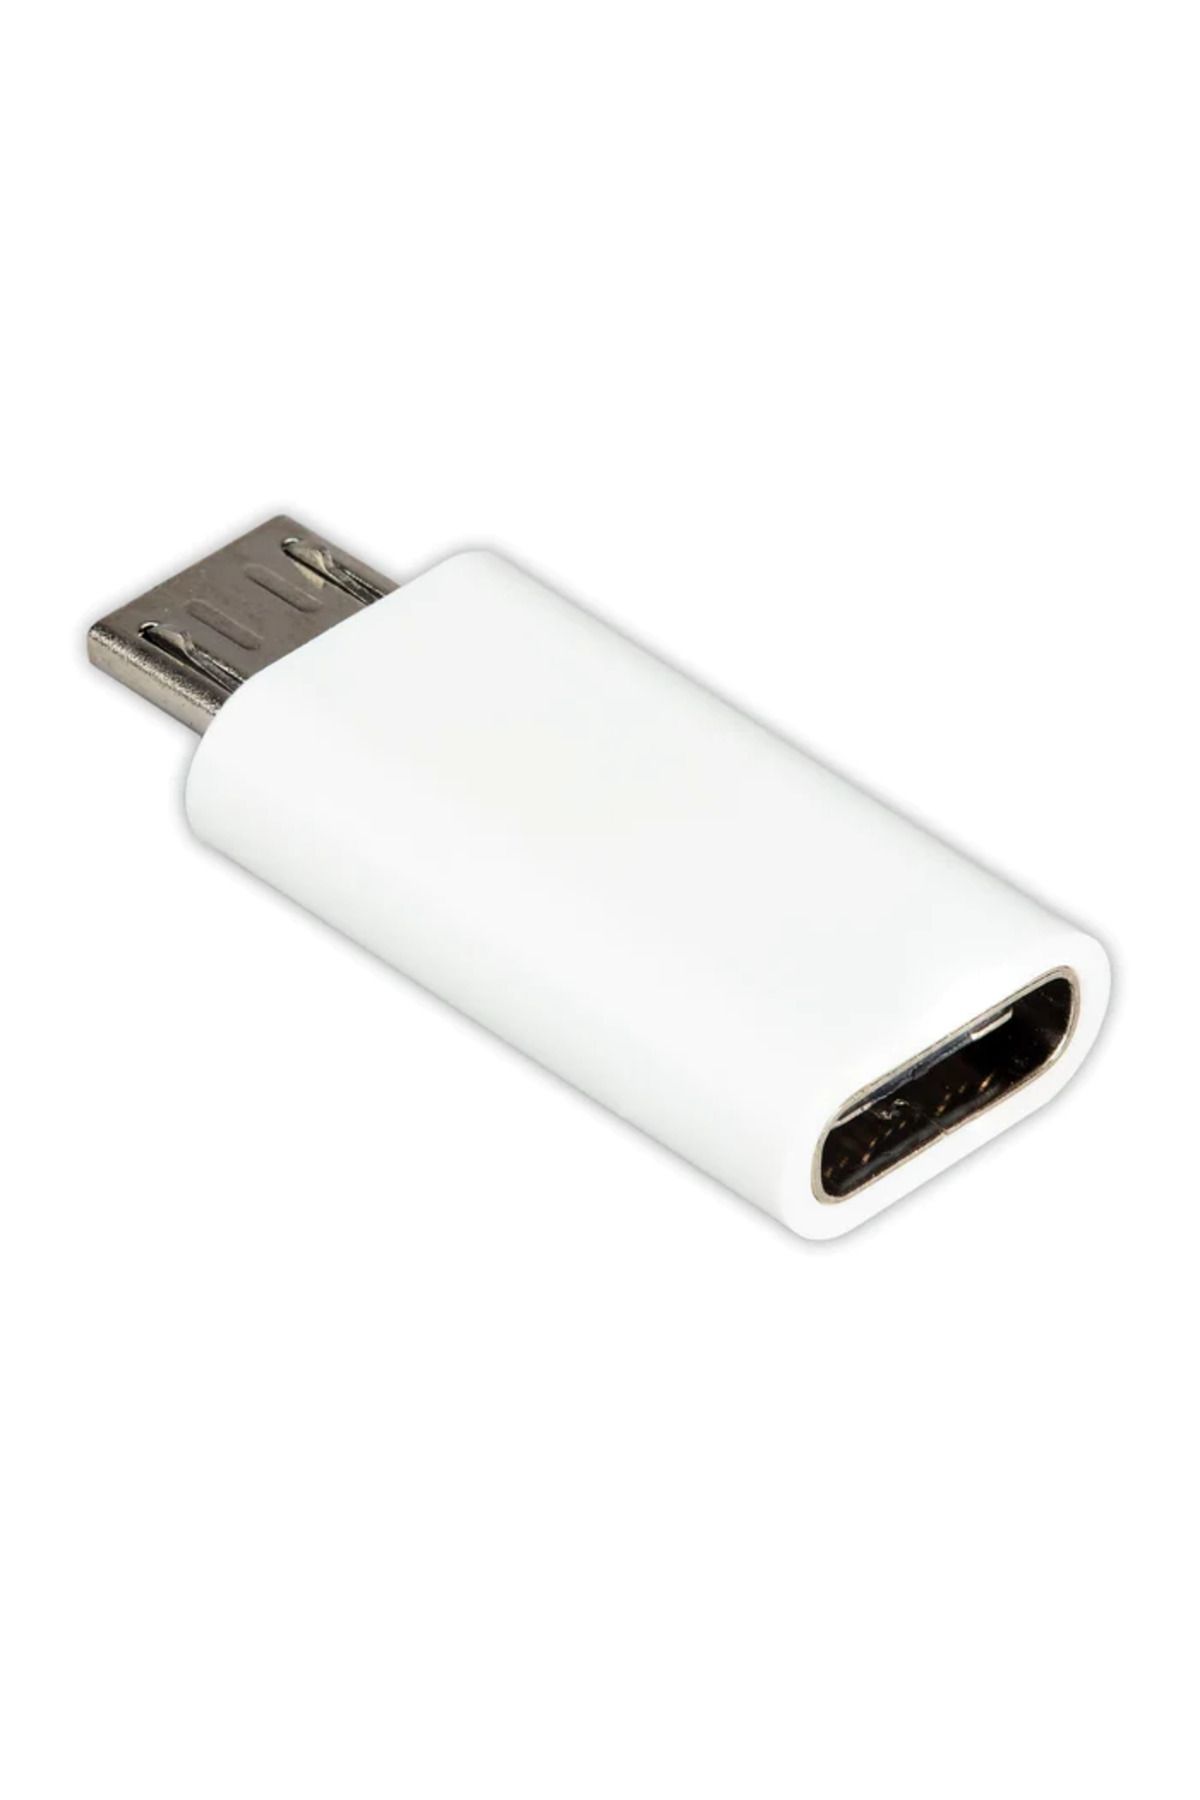 Raspberry Pi Mikro USB Erkek - USB C Dişi Adaptör